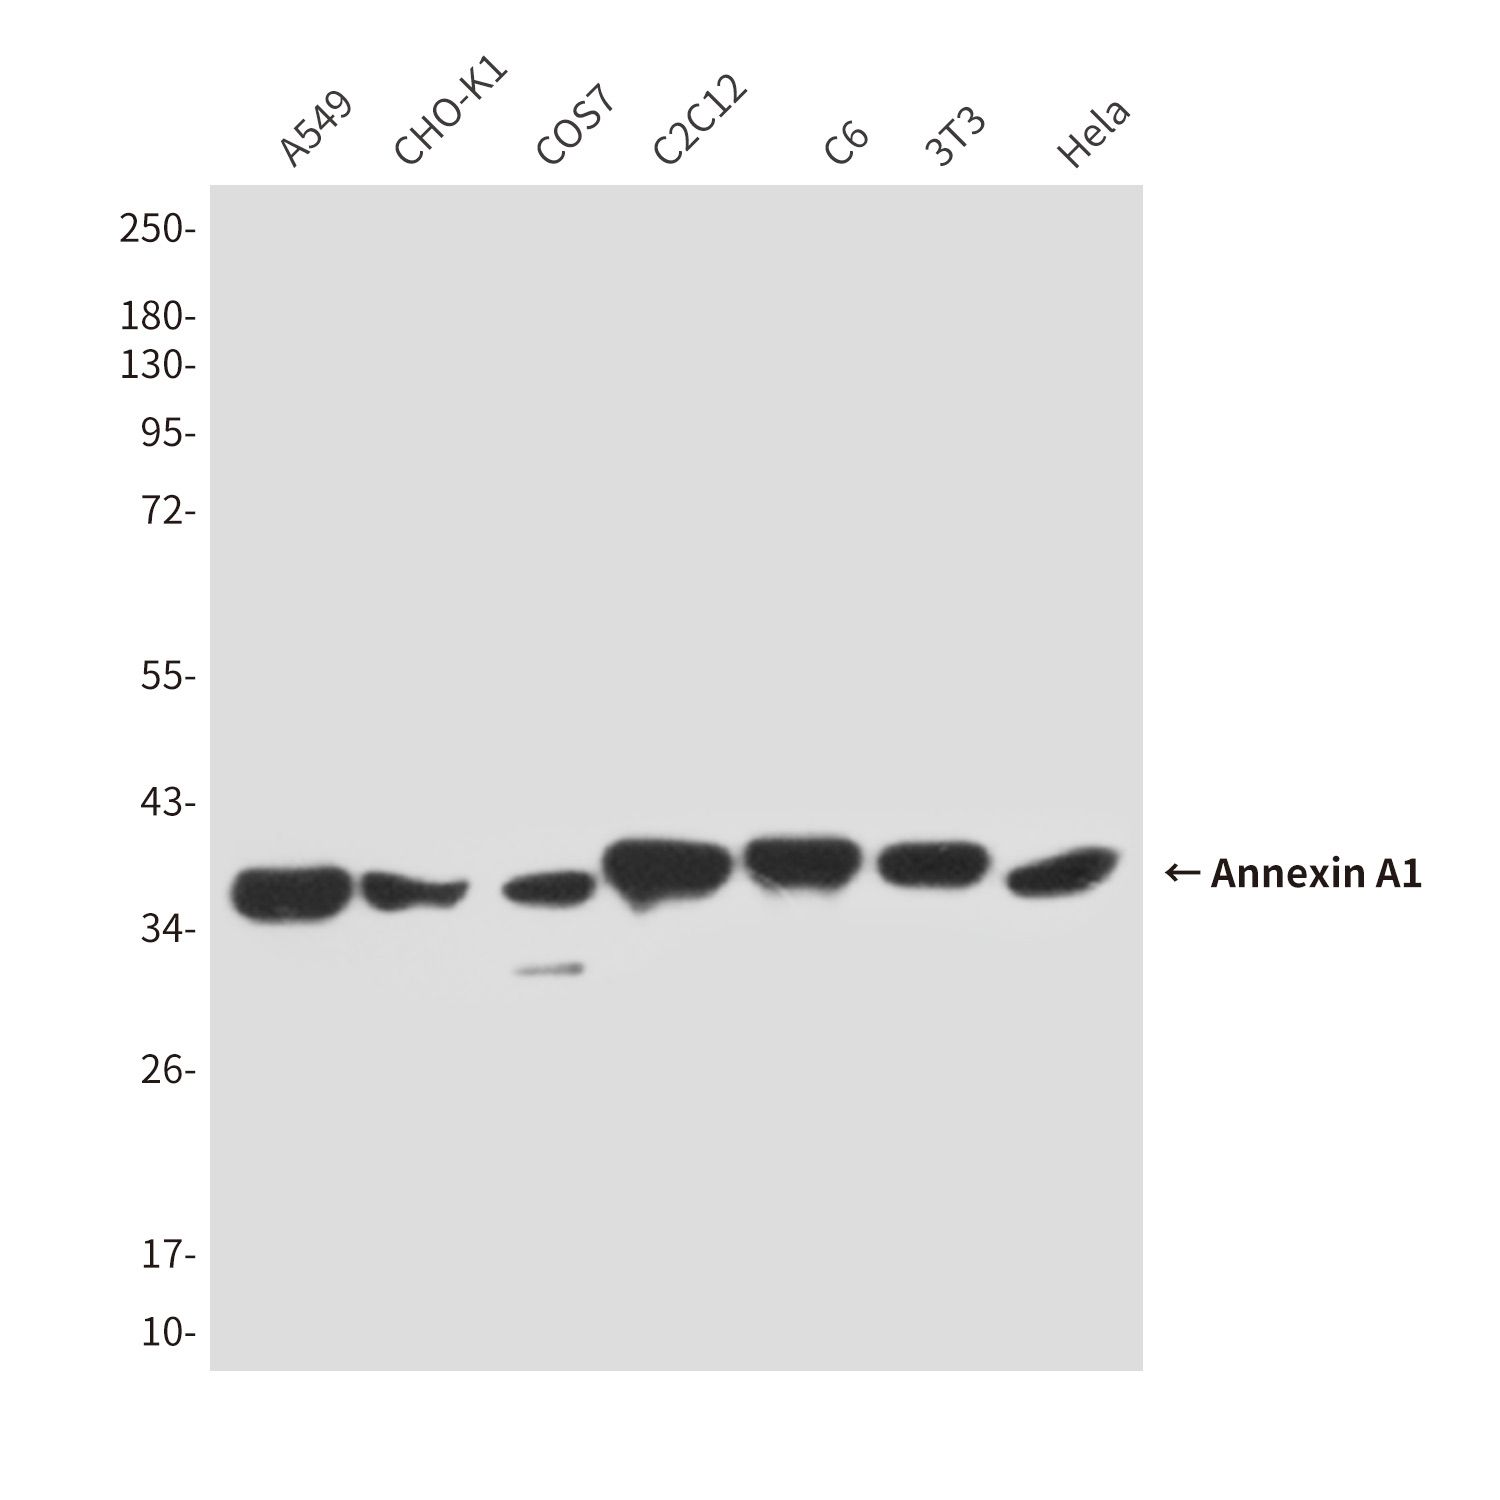 Annexin A1 (5E4D8) Mouse mAb